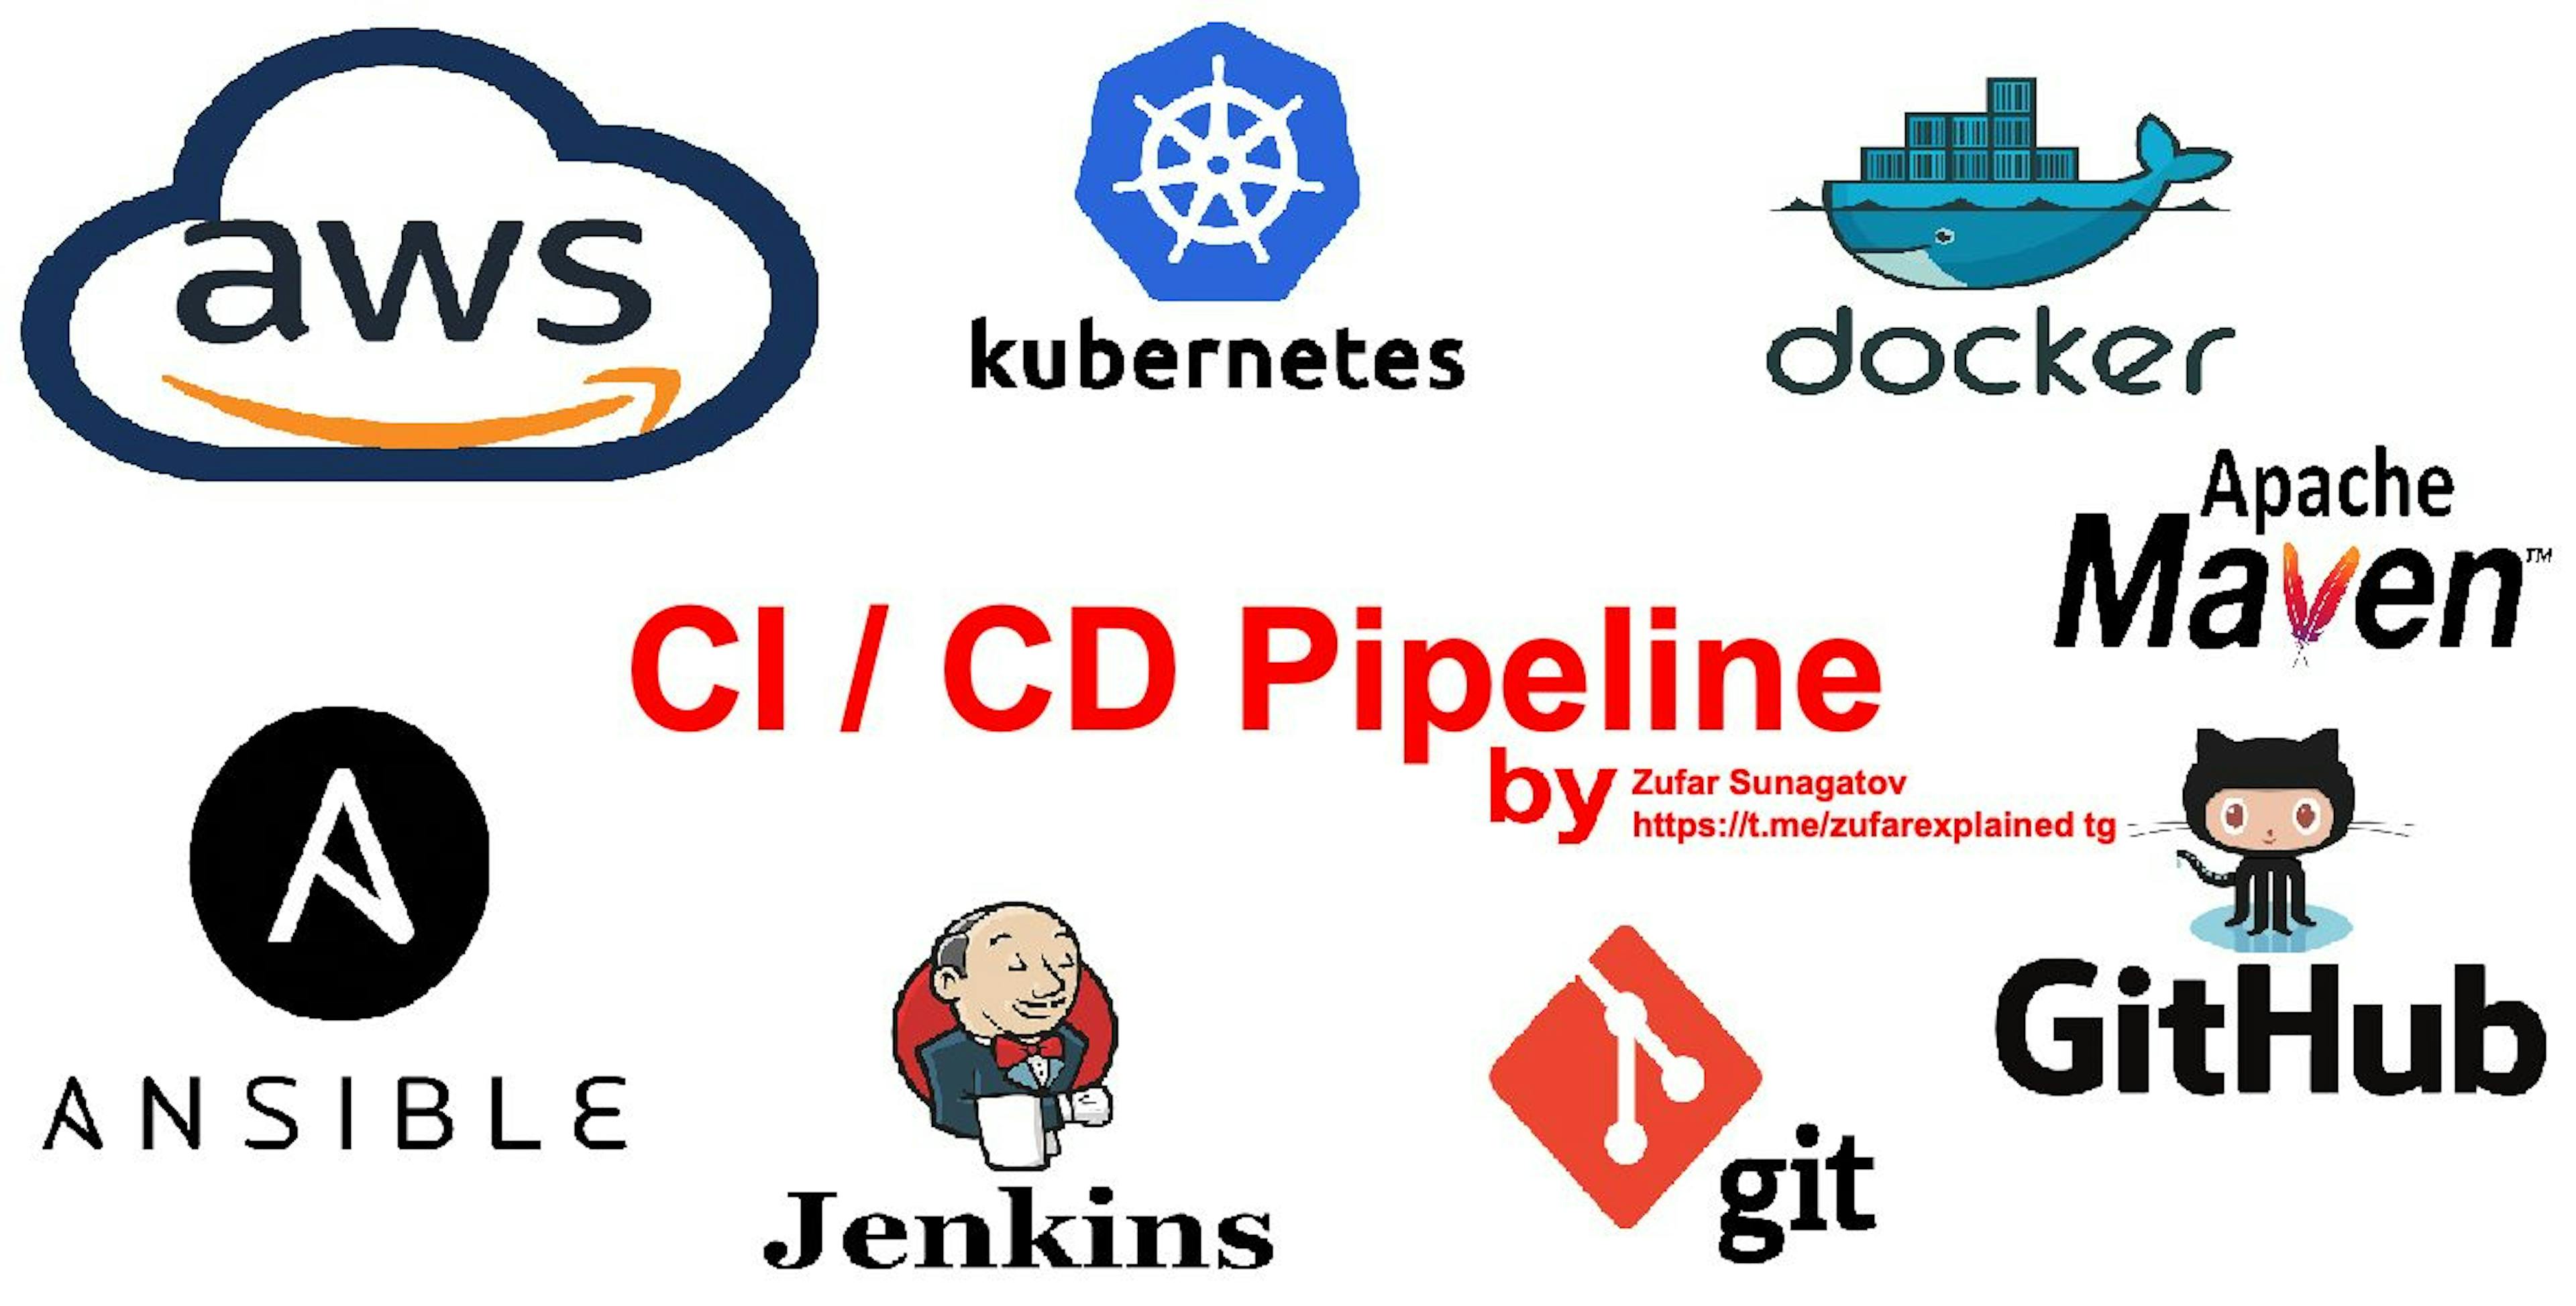 featured image - Создание конвейера CI/CD с помощью AWS, K8S, Docker, Ansible, Git, Github, Apache Maven и Jenkins